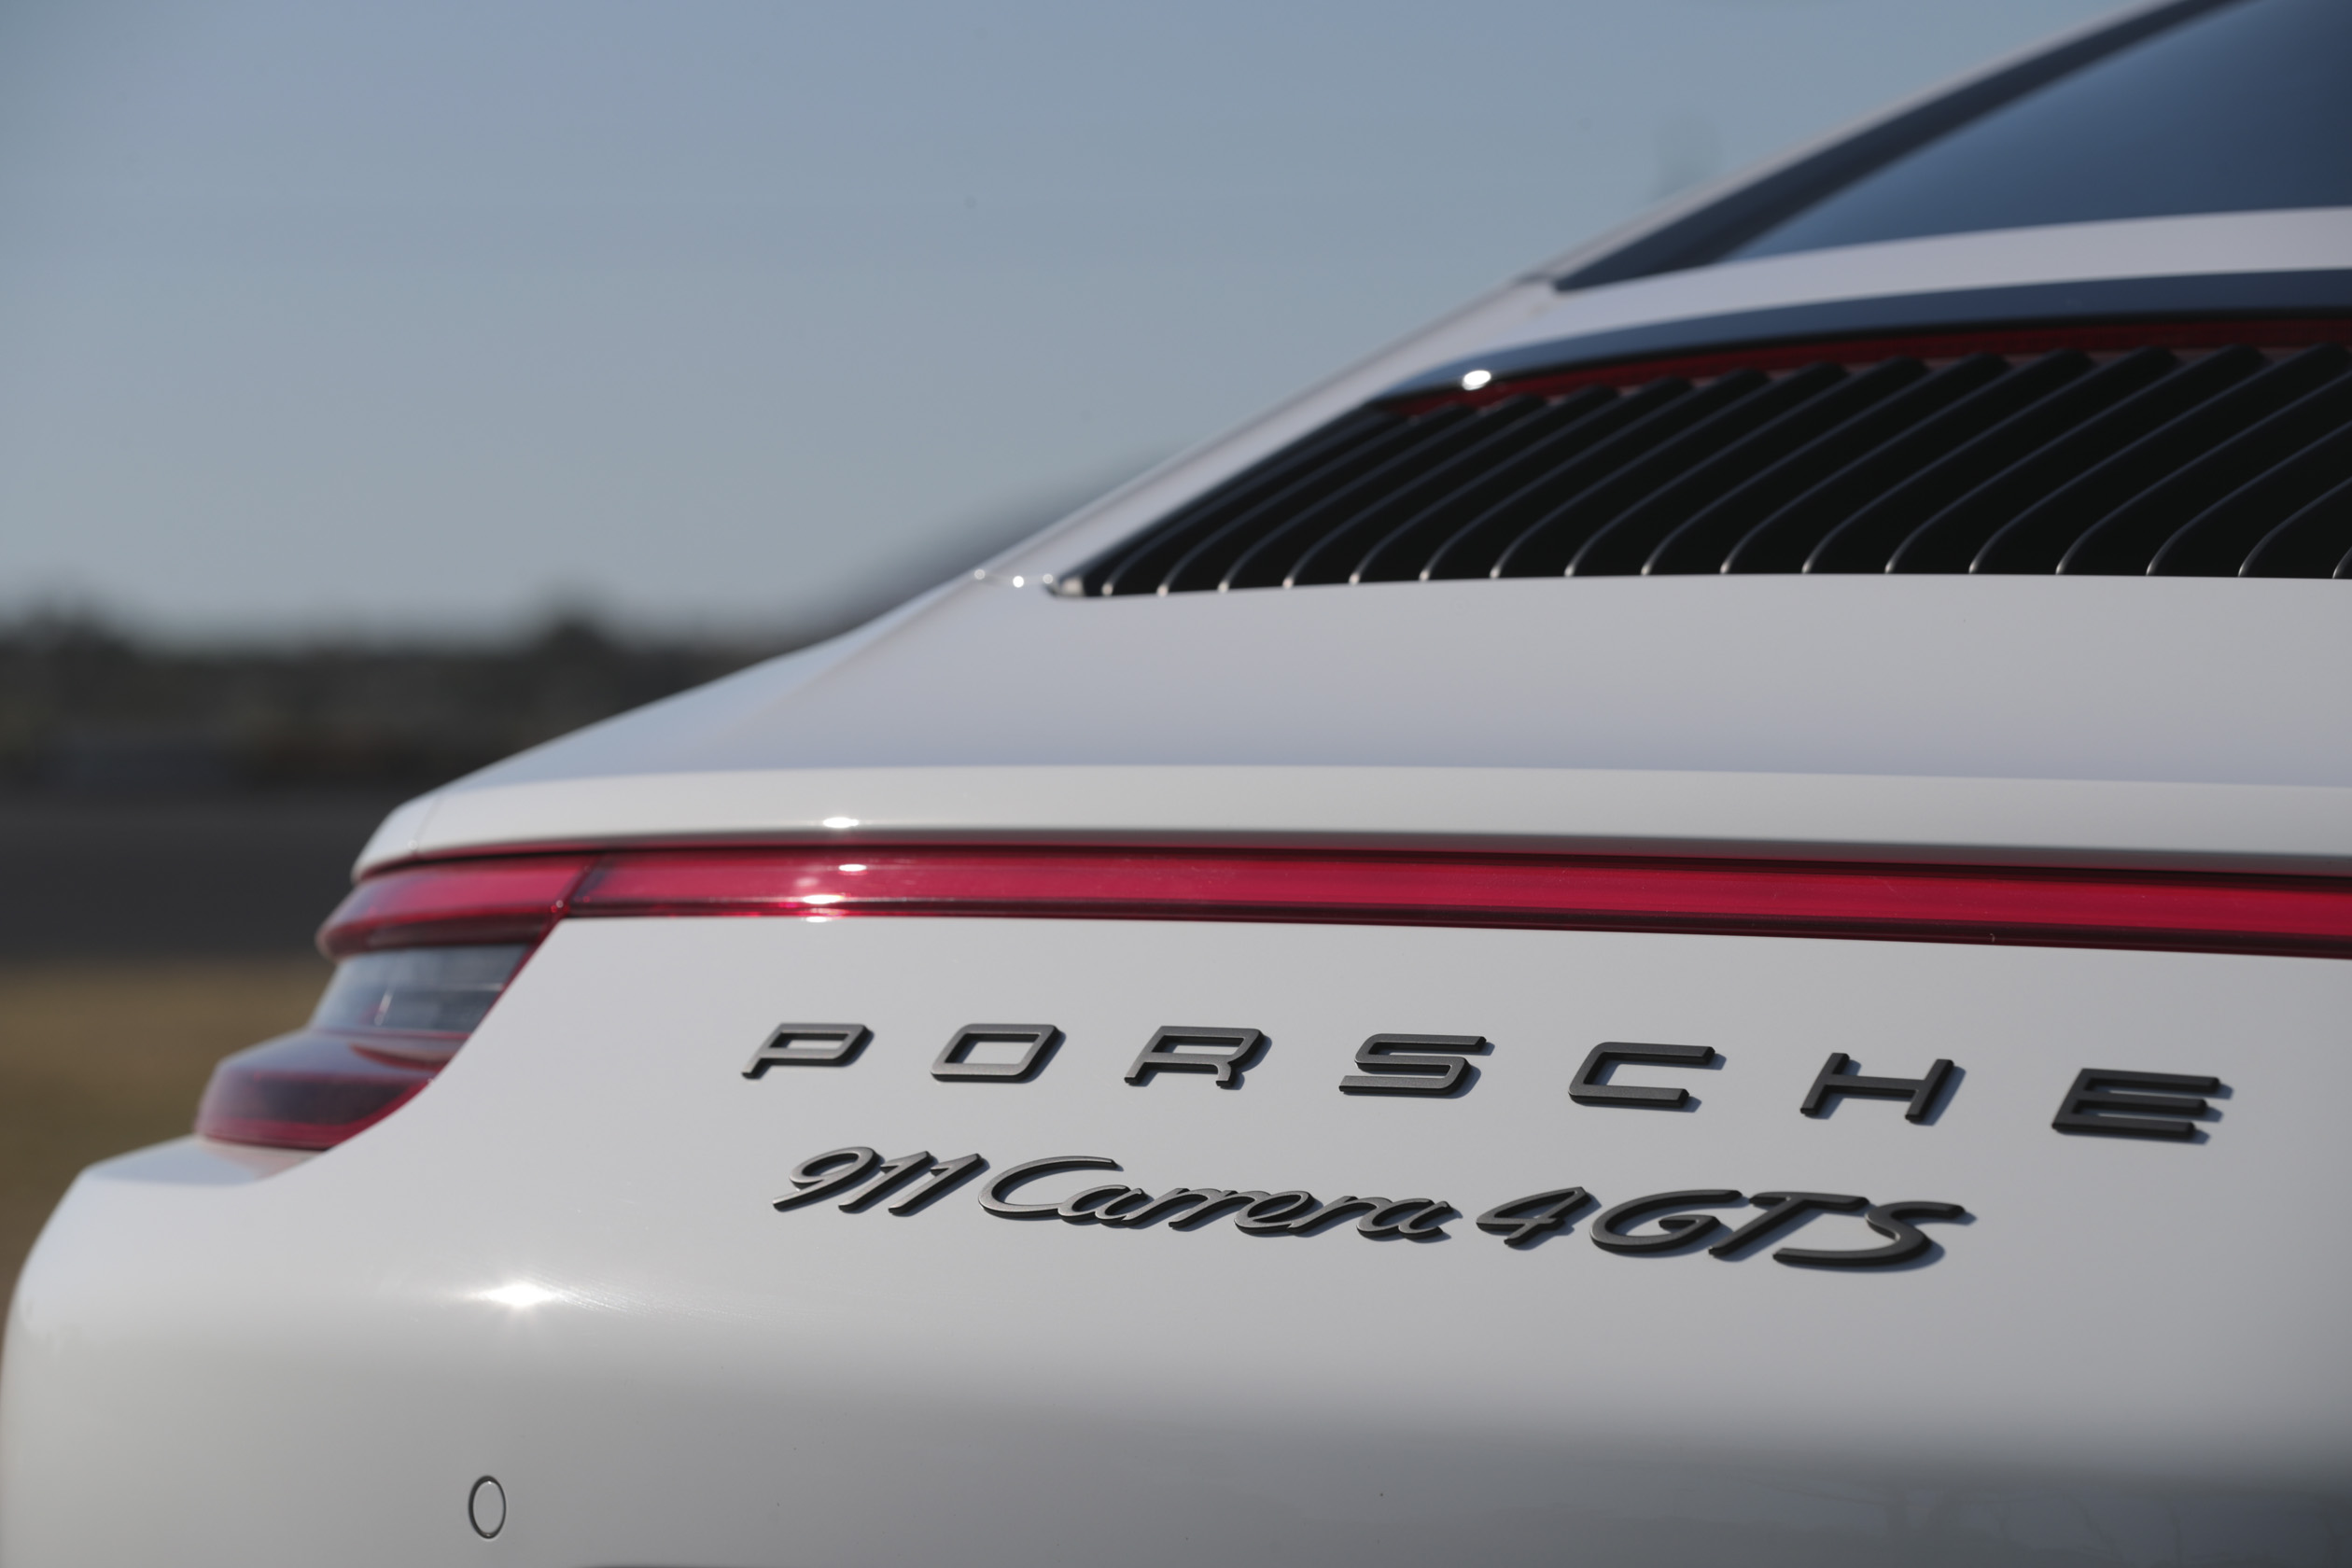 Porsche 911 Carrera 4 GTS Coupe (991.2)